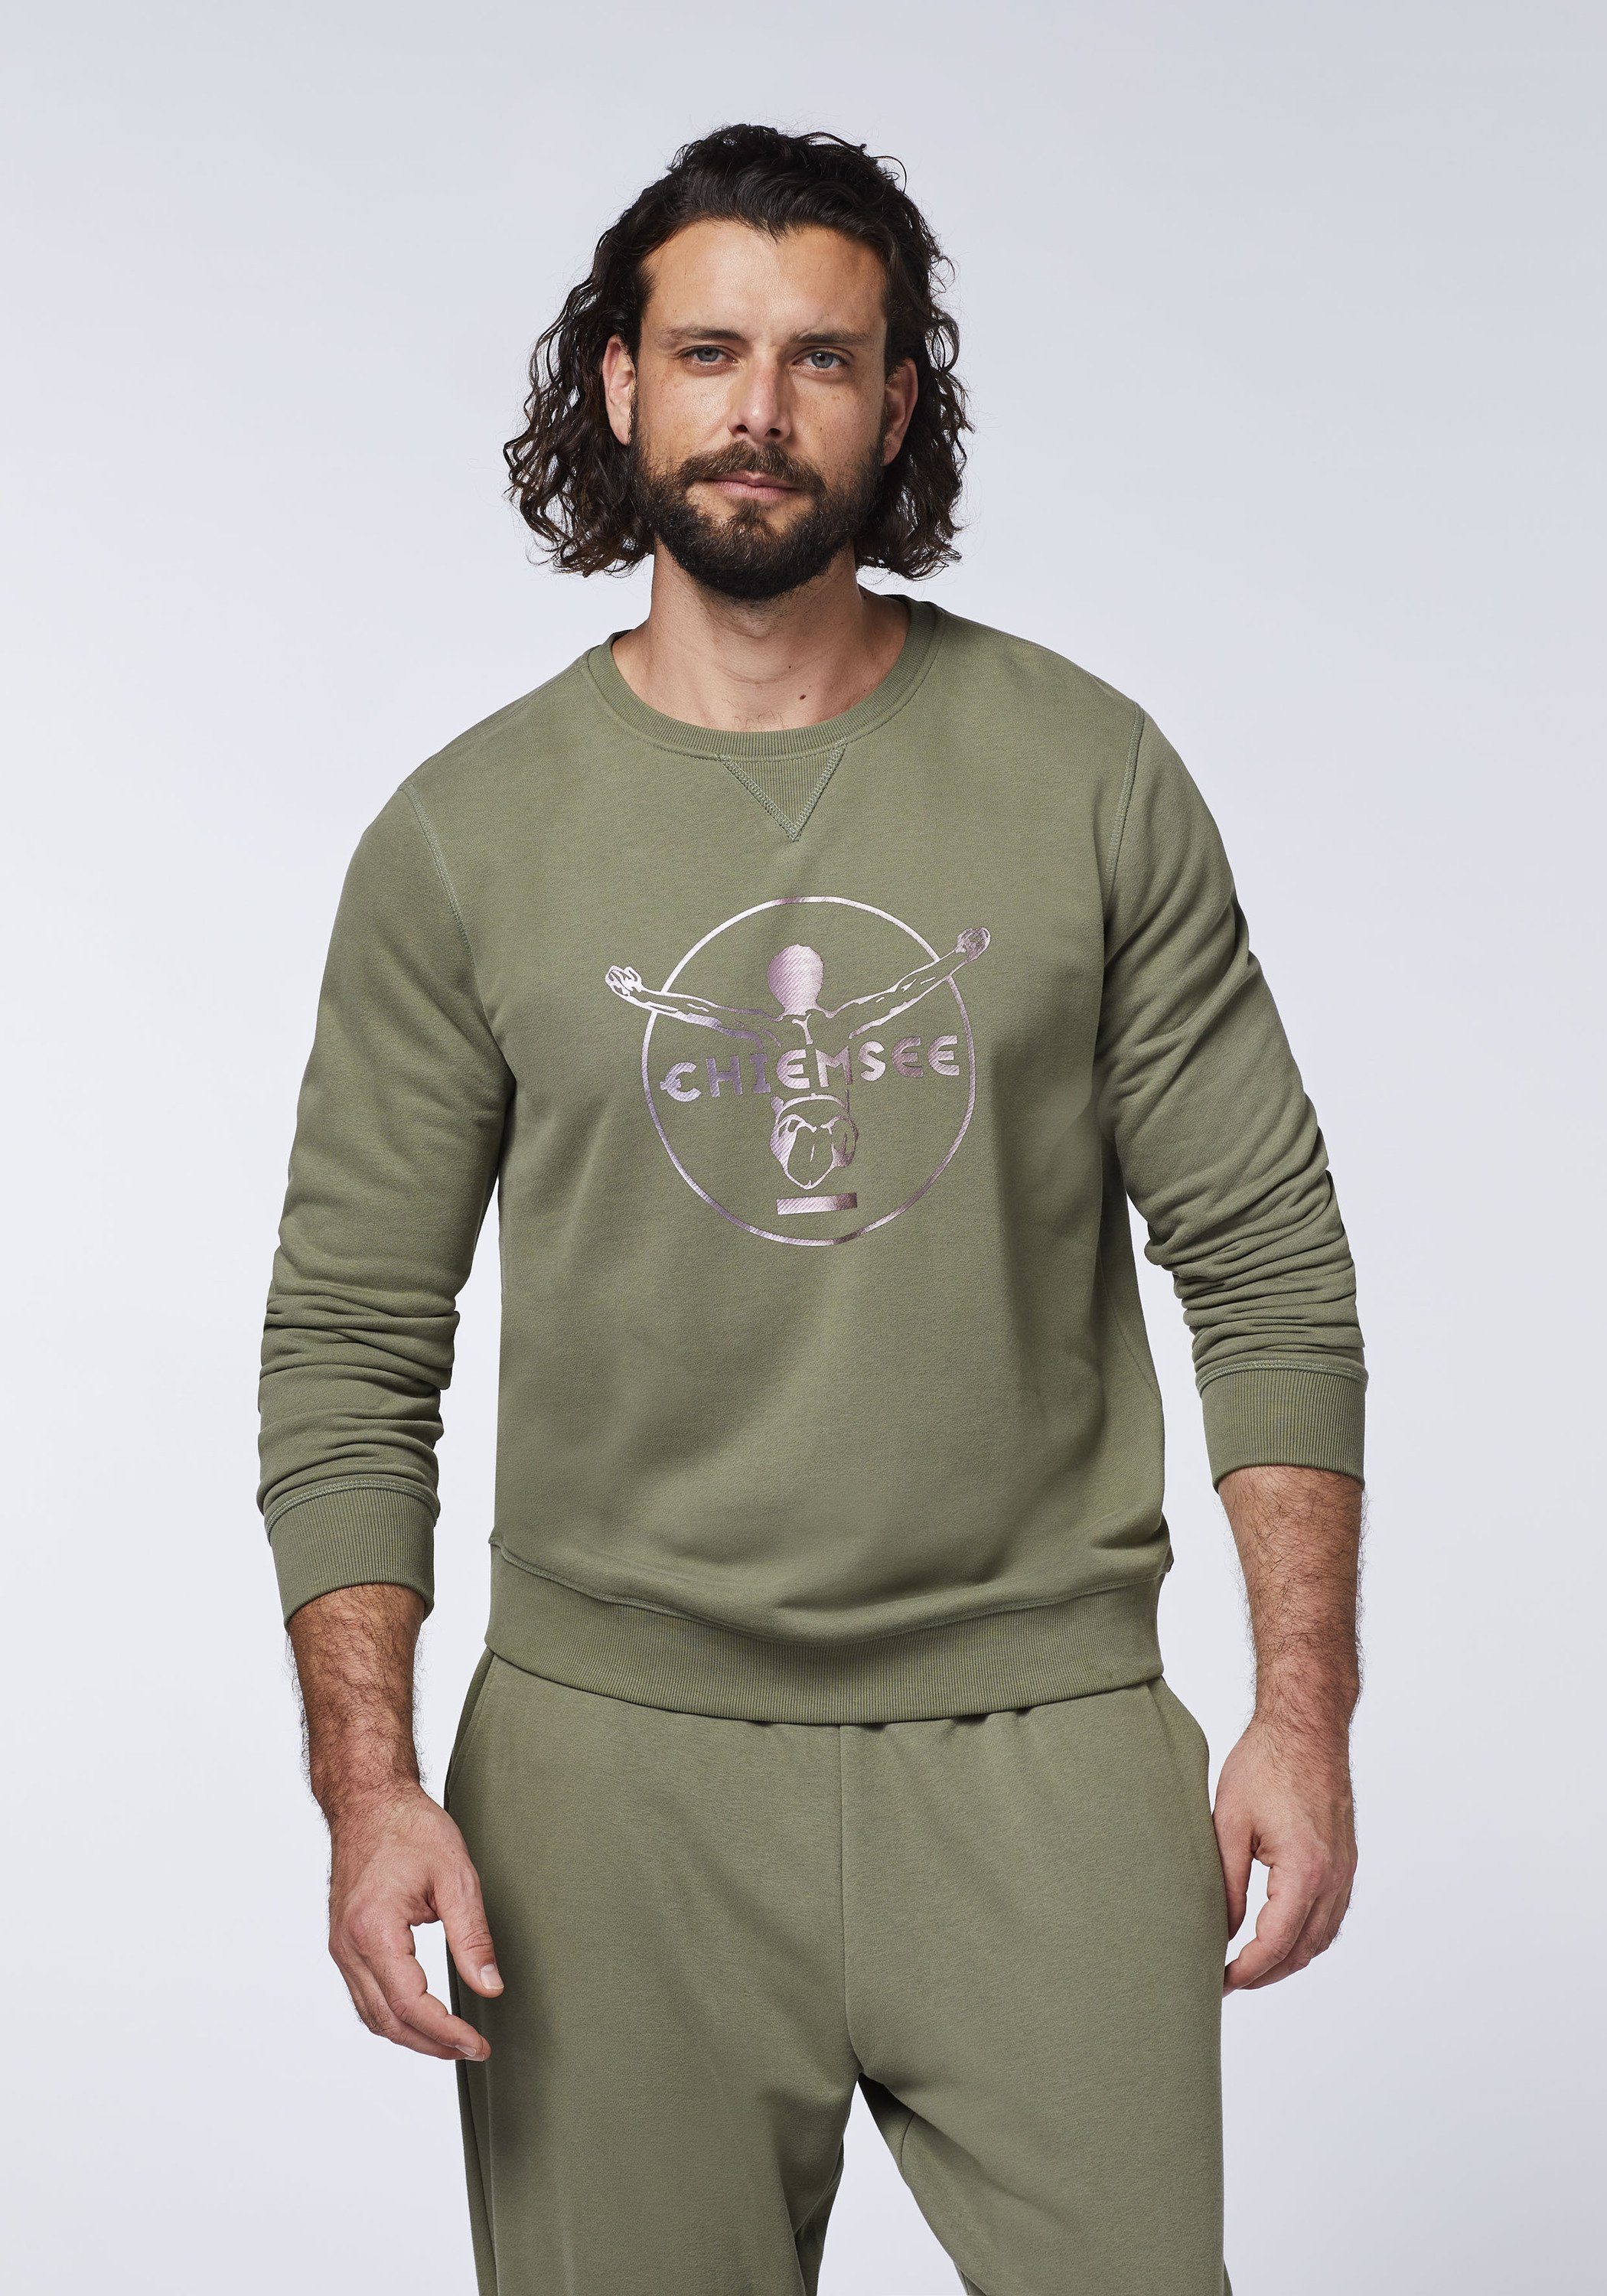 Chiemsee Sweatshirt 18-0515 Sweater im Olive Dusty 1 Label-Look